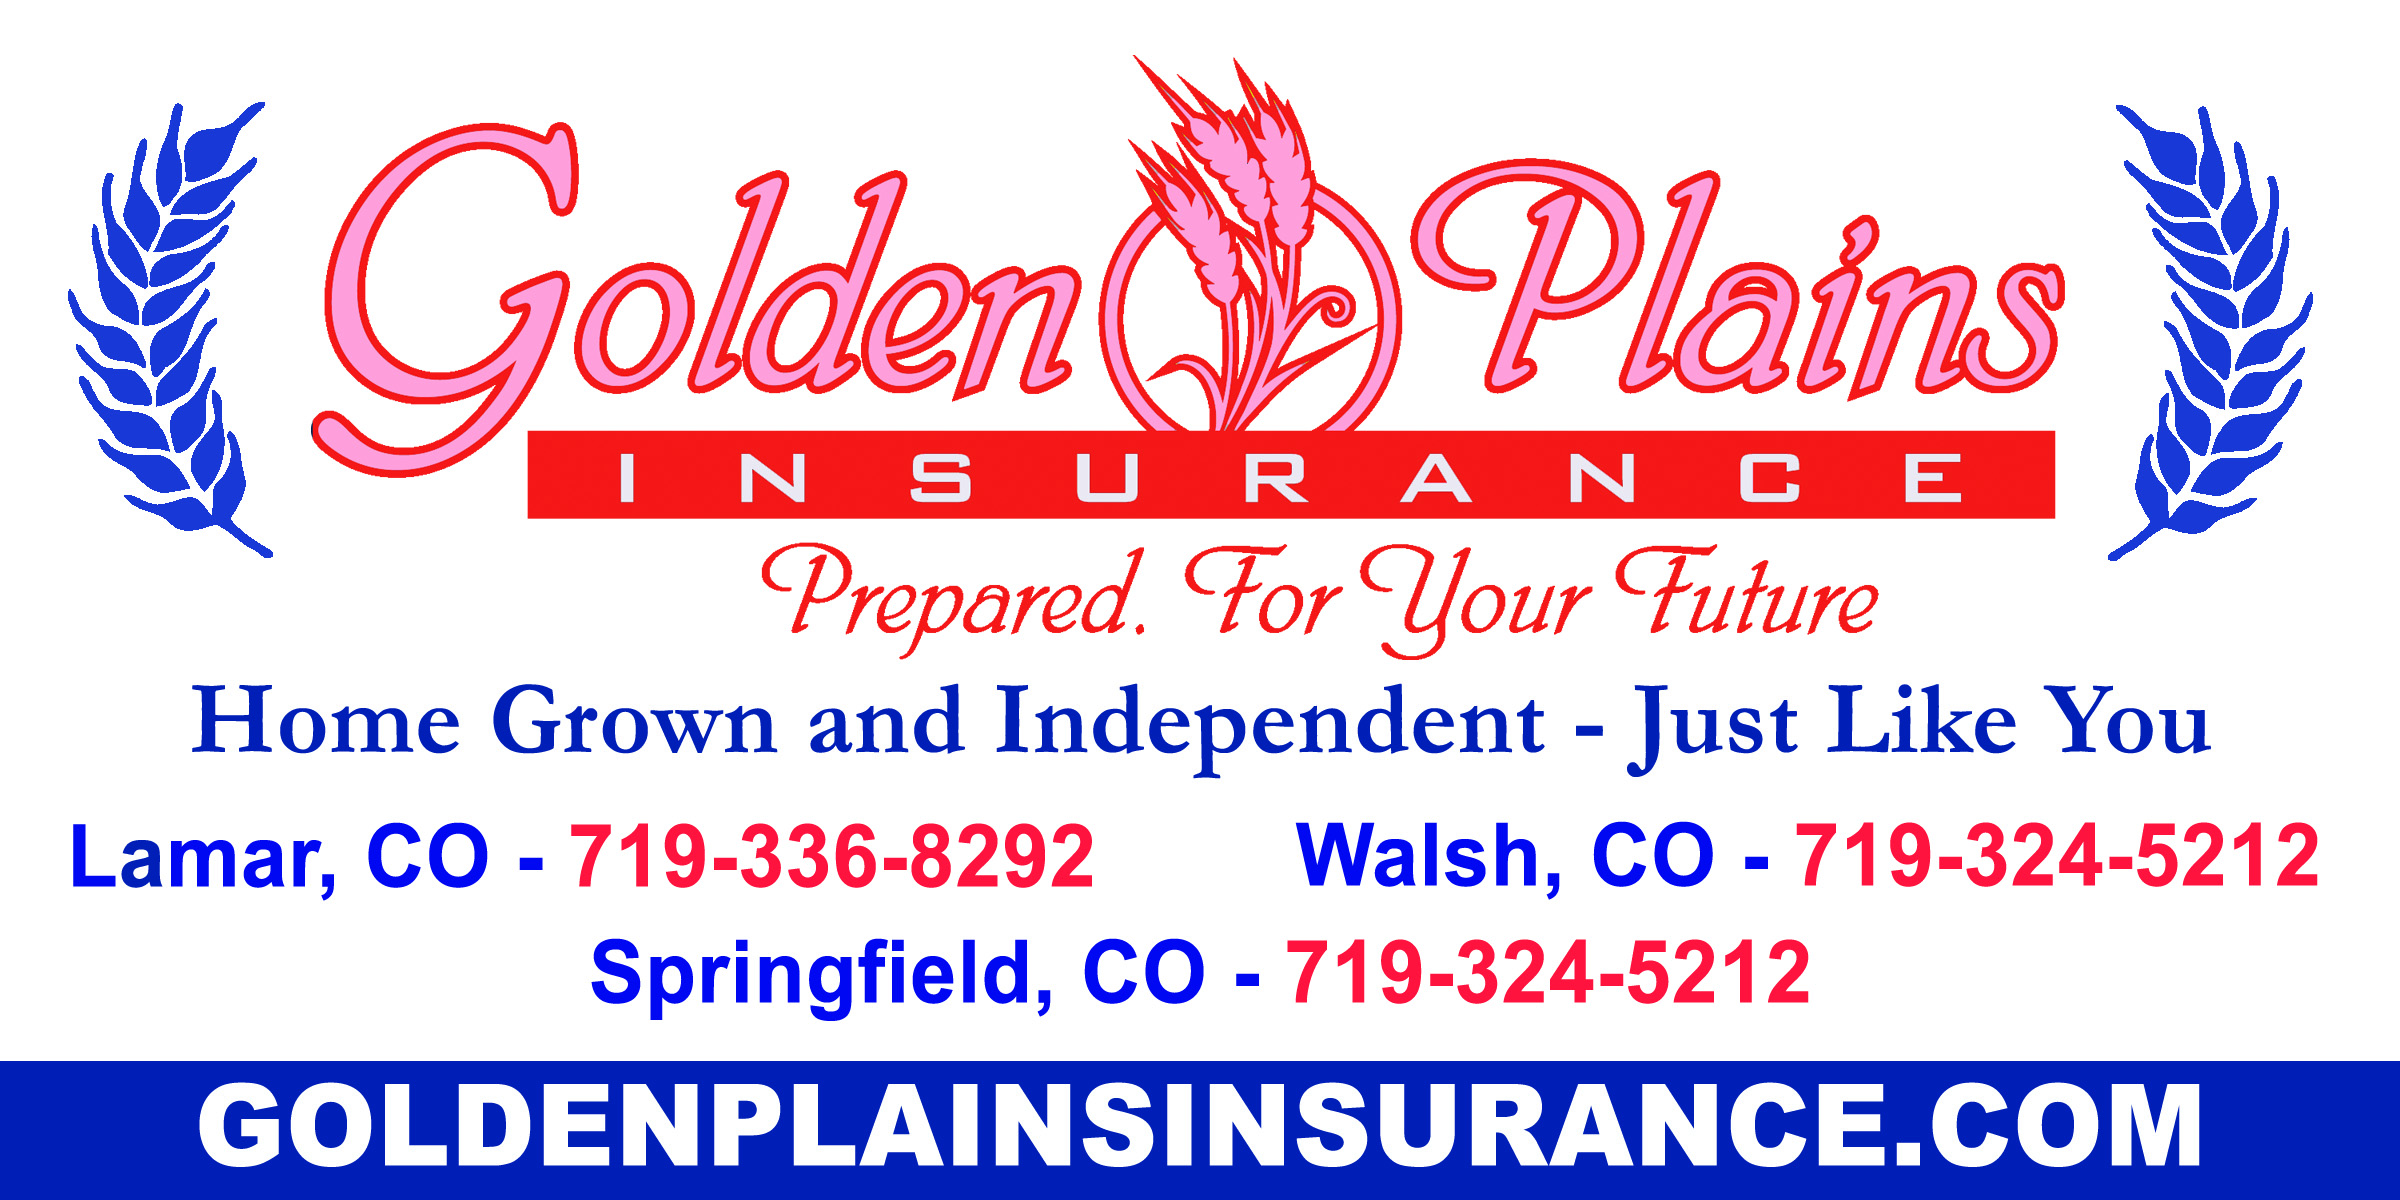 Golden Plains Insurance ad